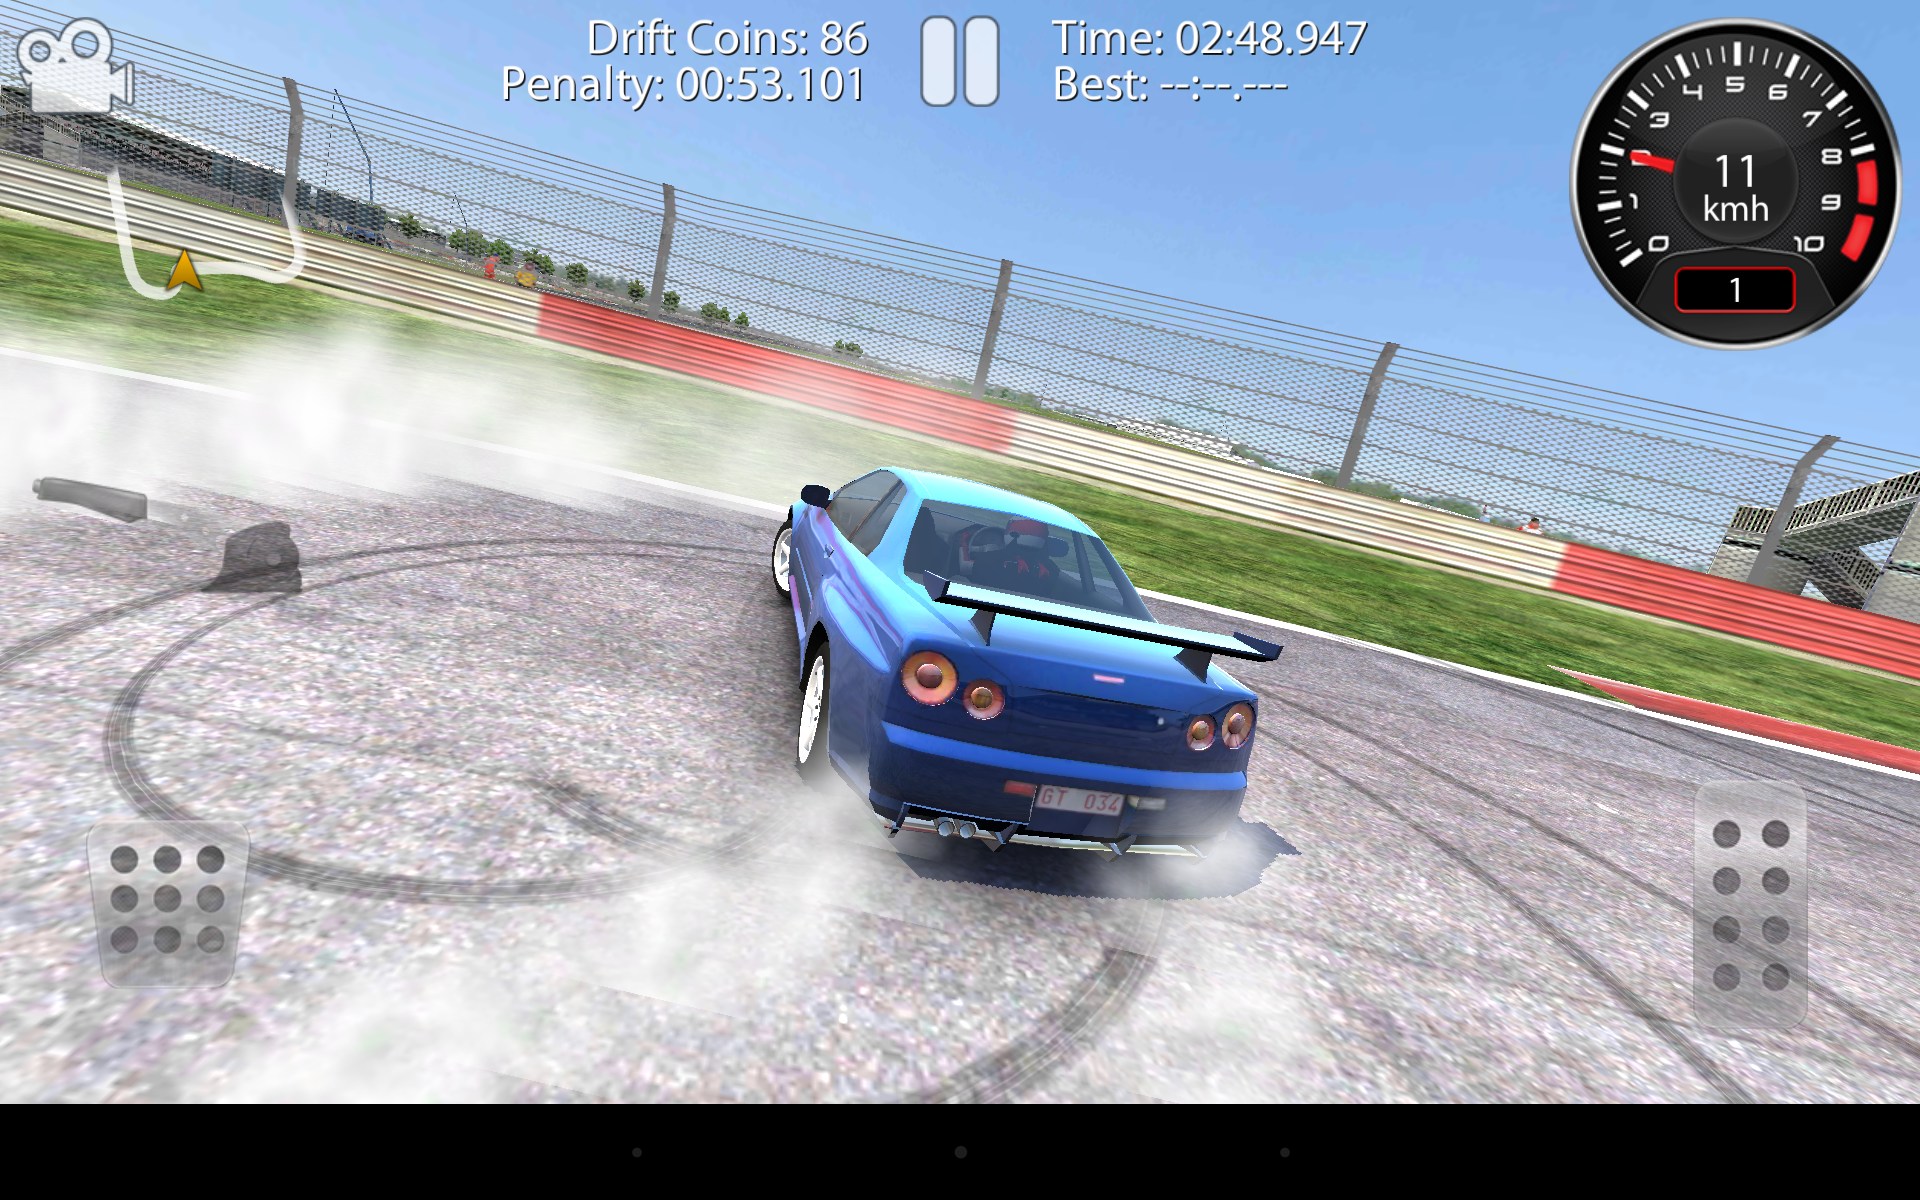 car x drift racing games